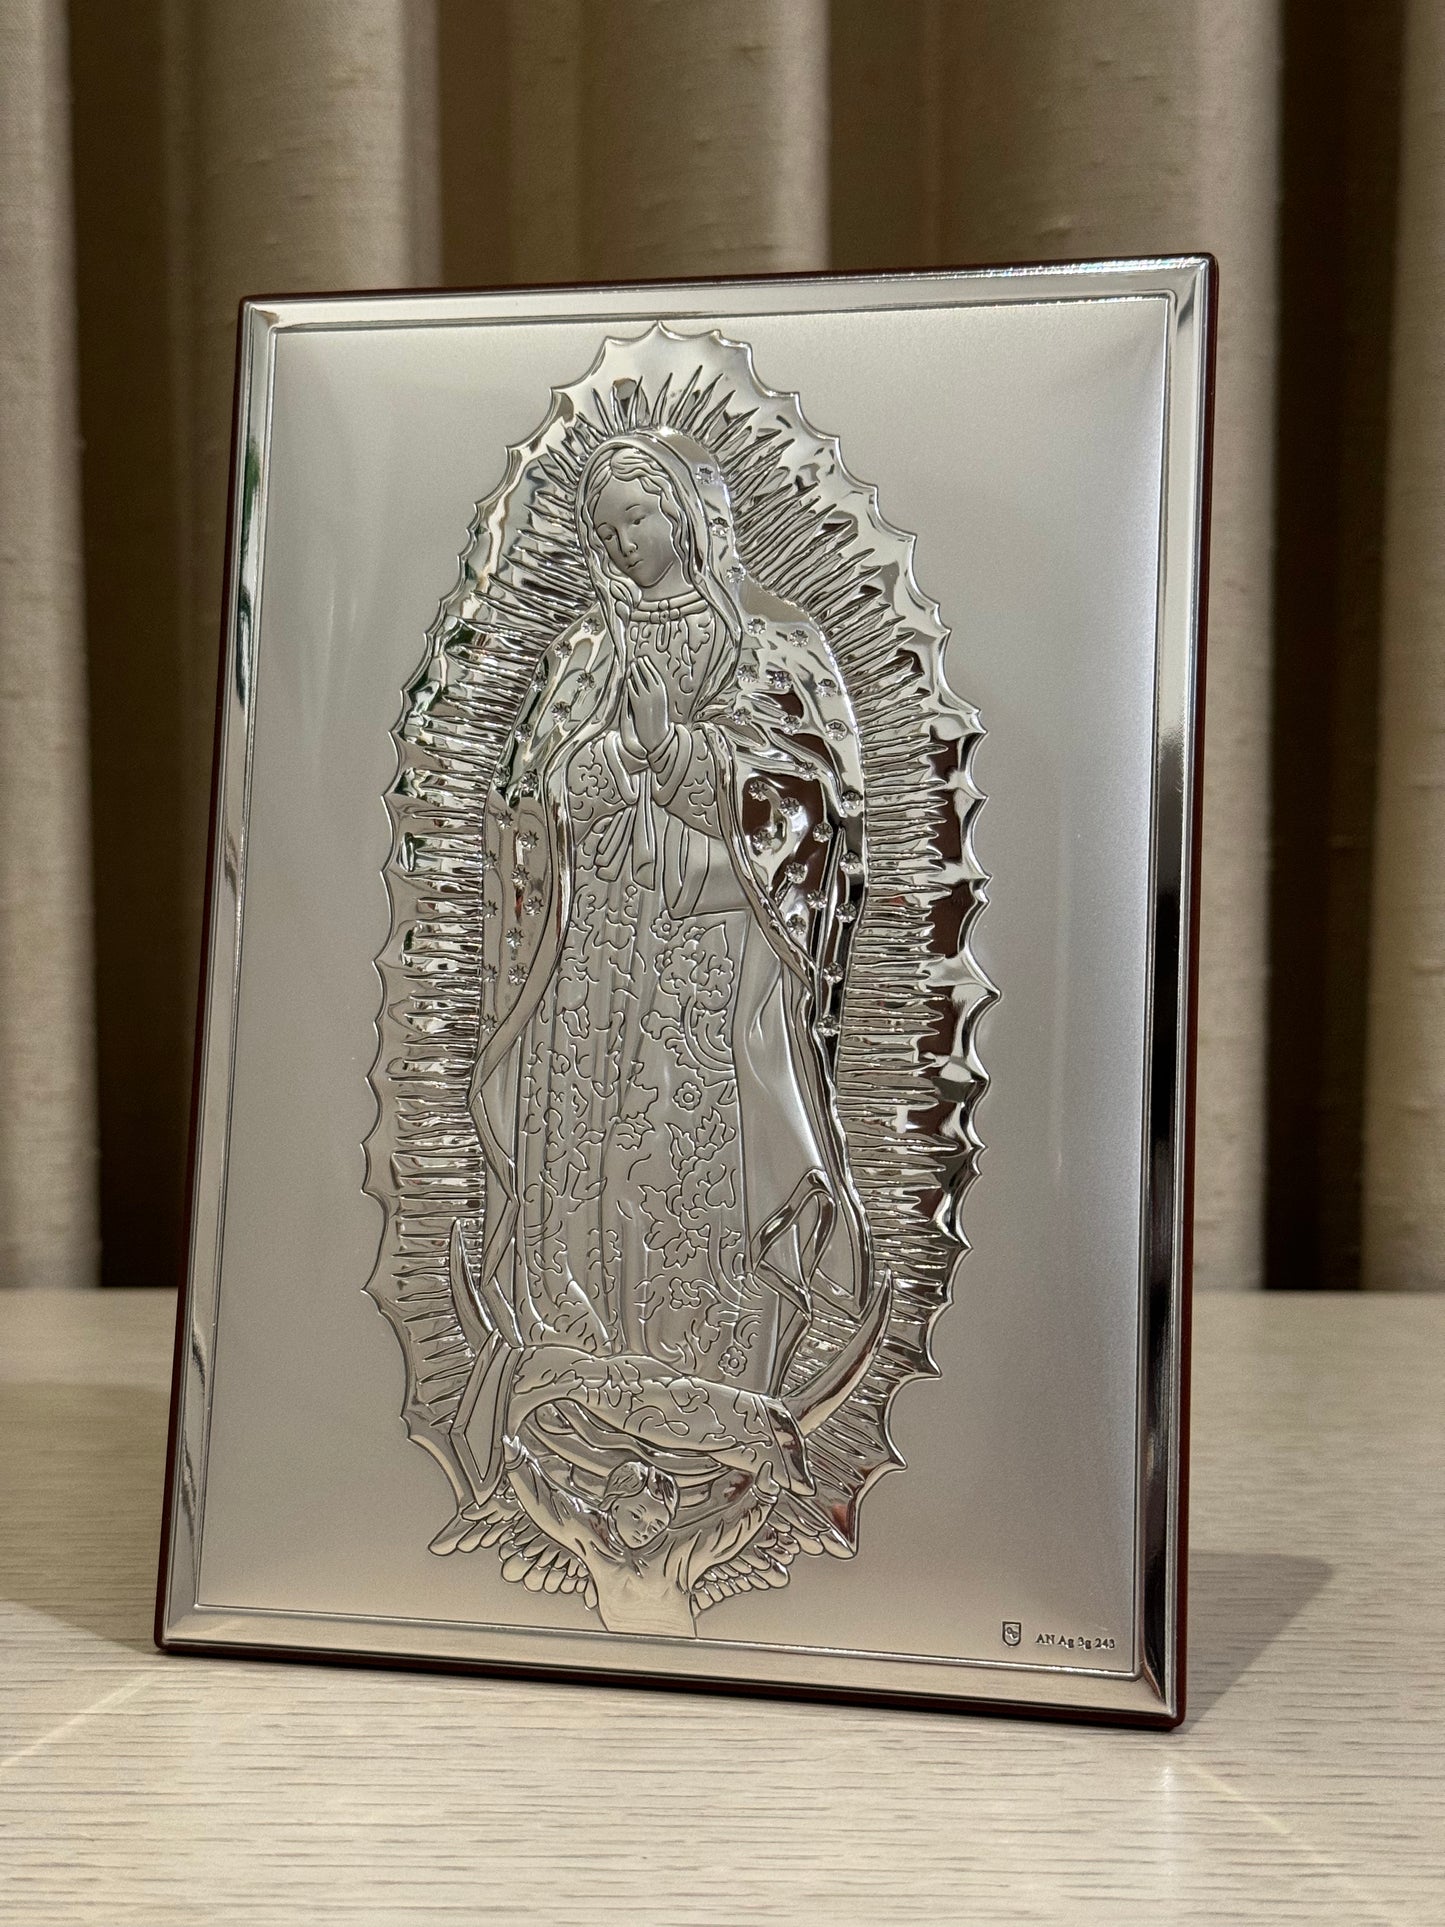 Cuadro Virgen de Guadalupe Plata .925